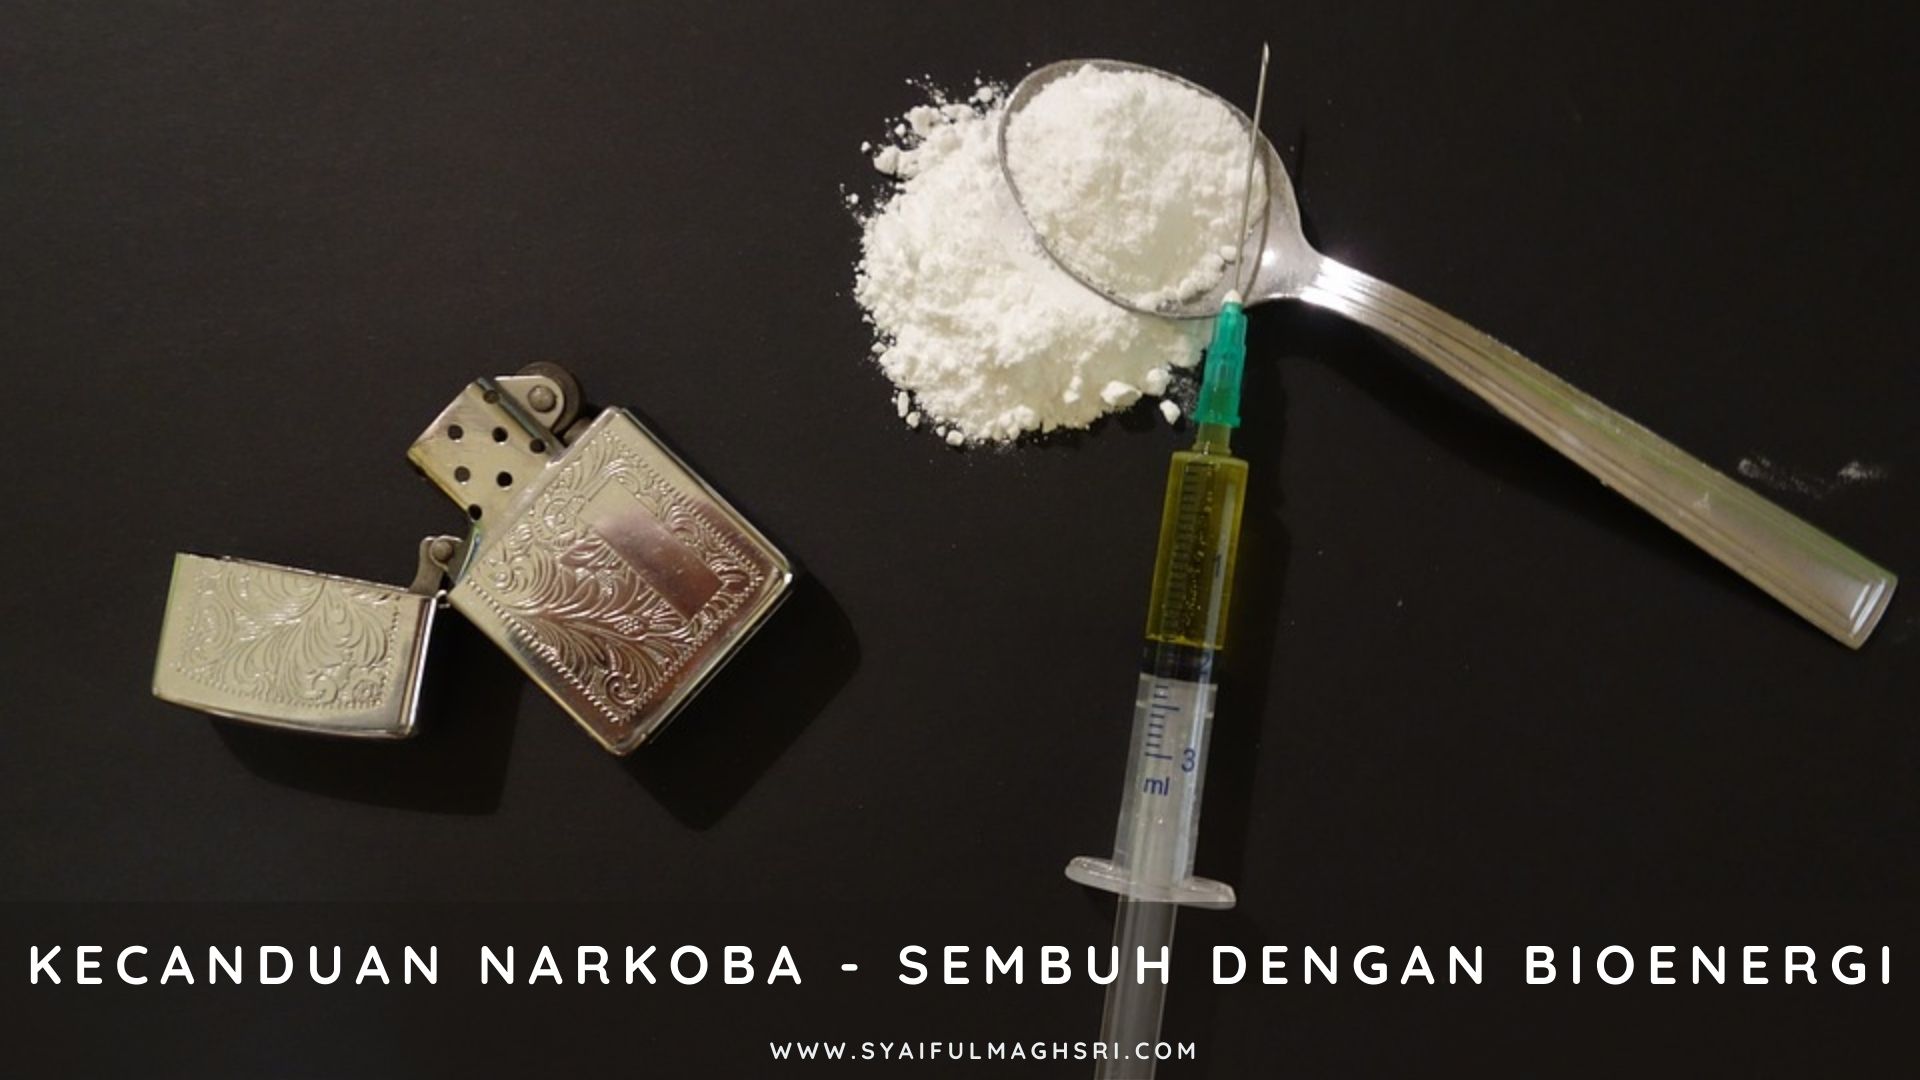 Kecanduan Narkoba - Syaiful Maghsri.com